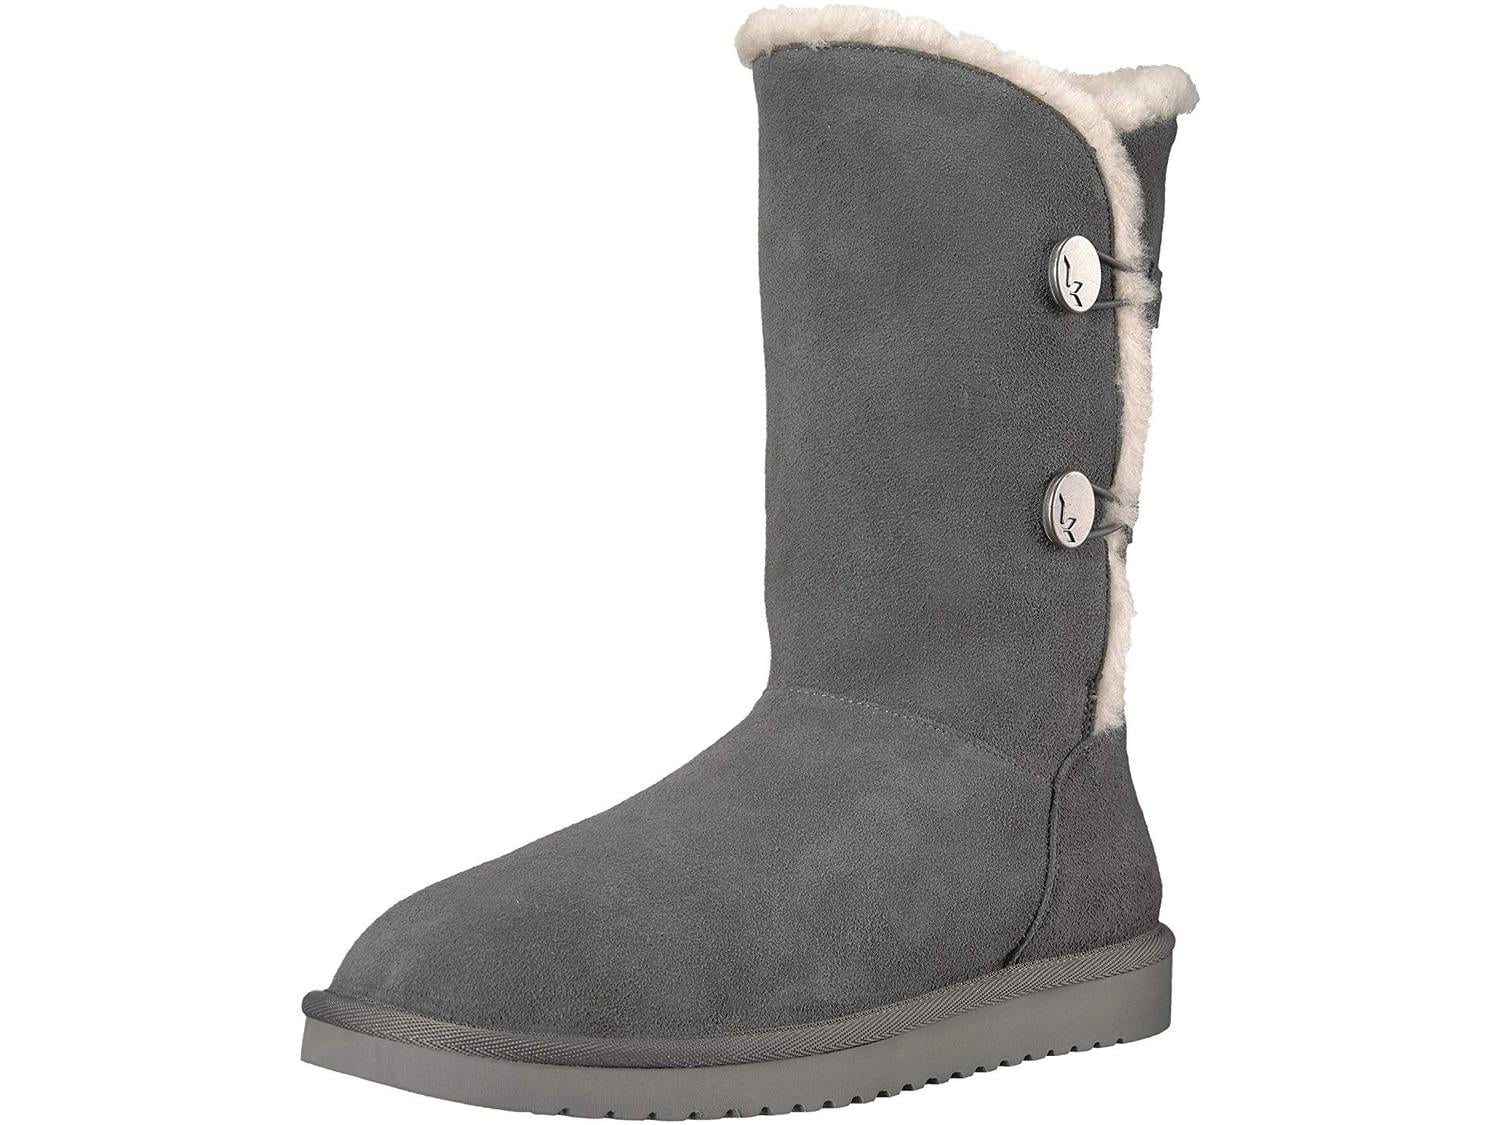 koolaburra gray boots